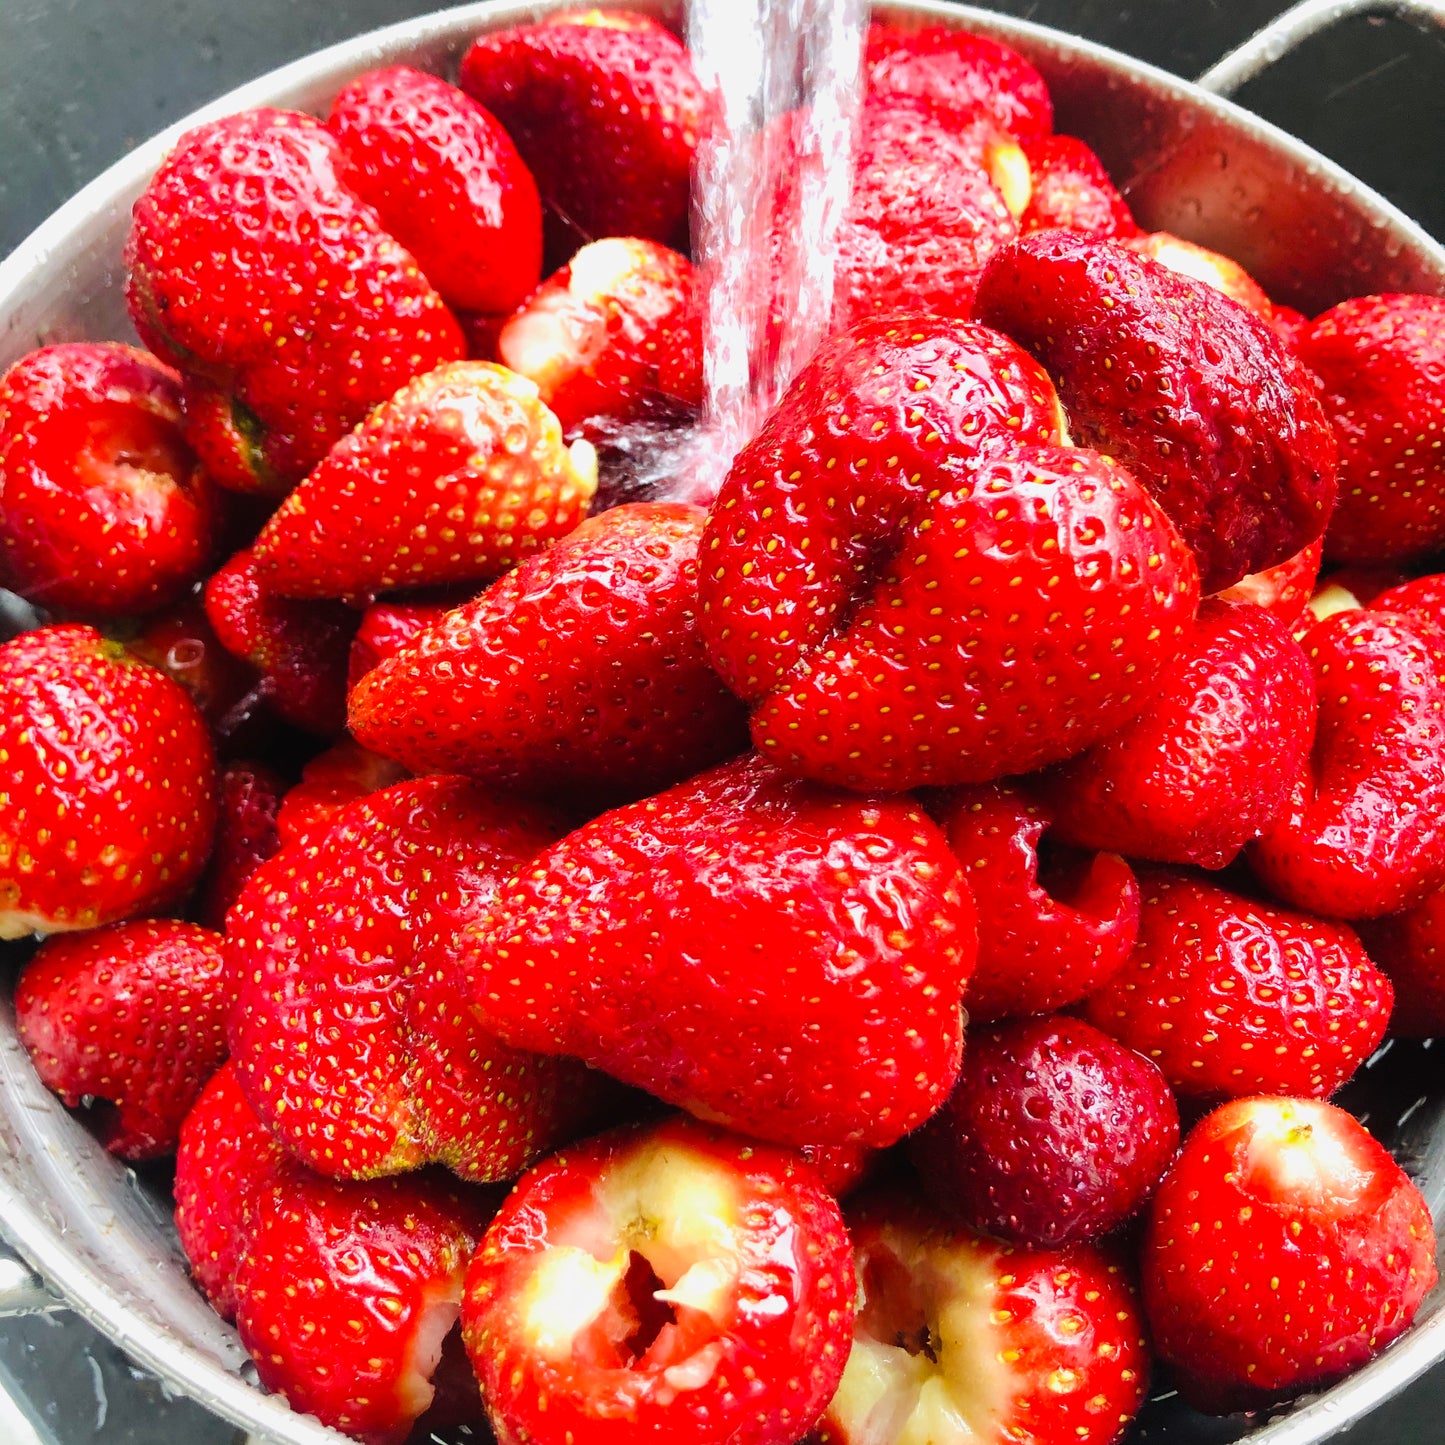 Addy's Cranberry, Oranges, Strawberries w/ Cloves & Cinnamon Jam